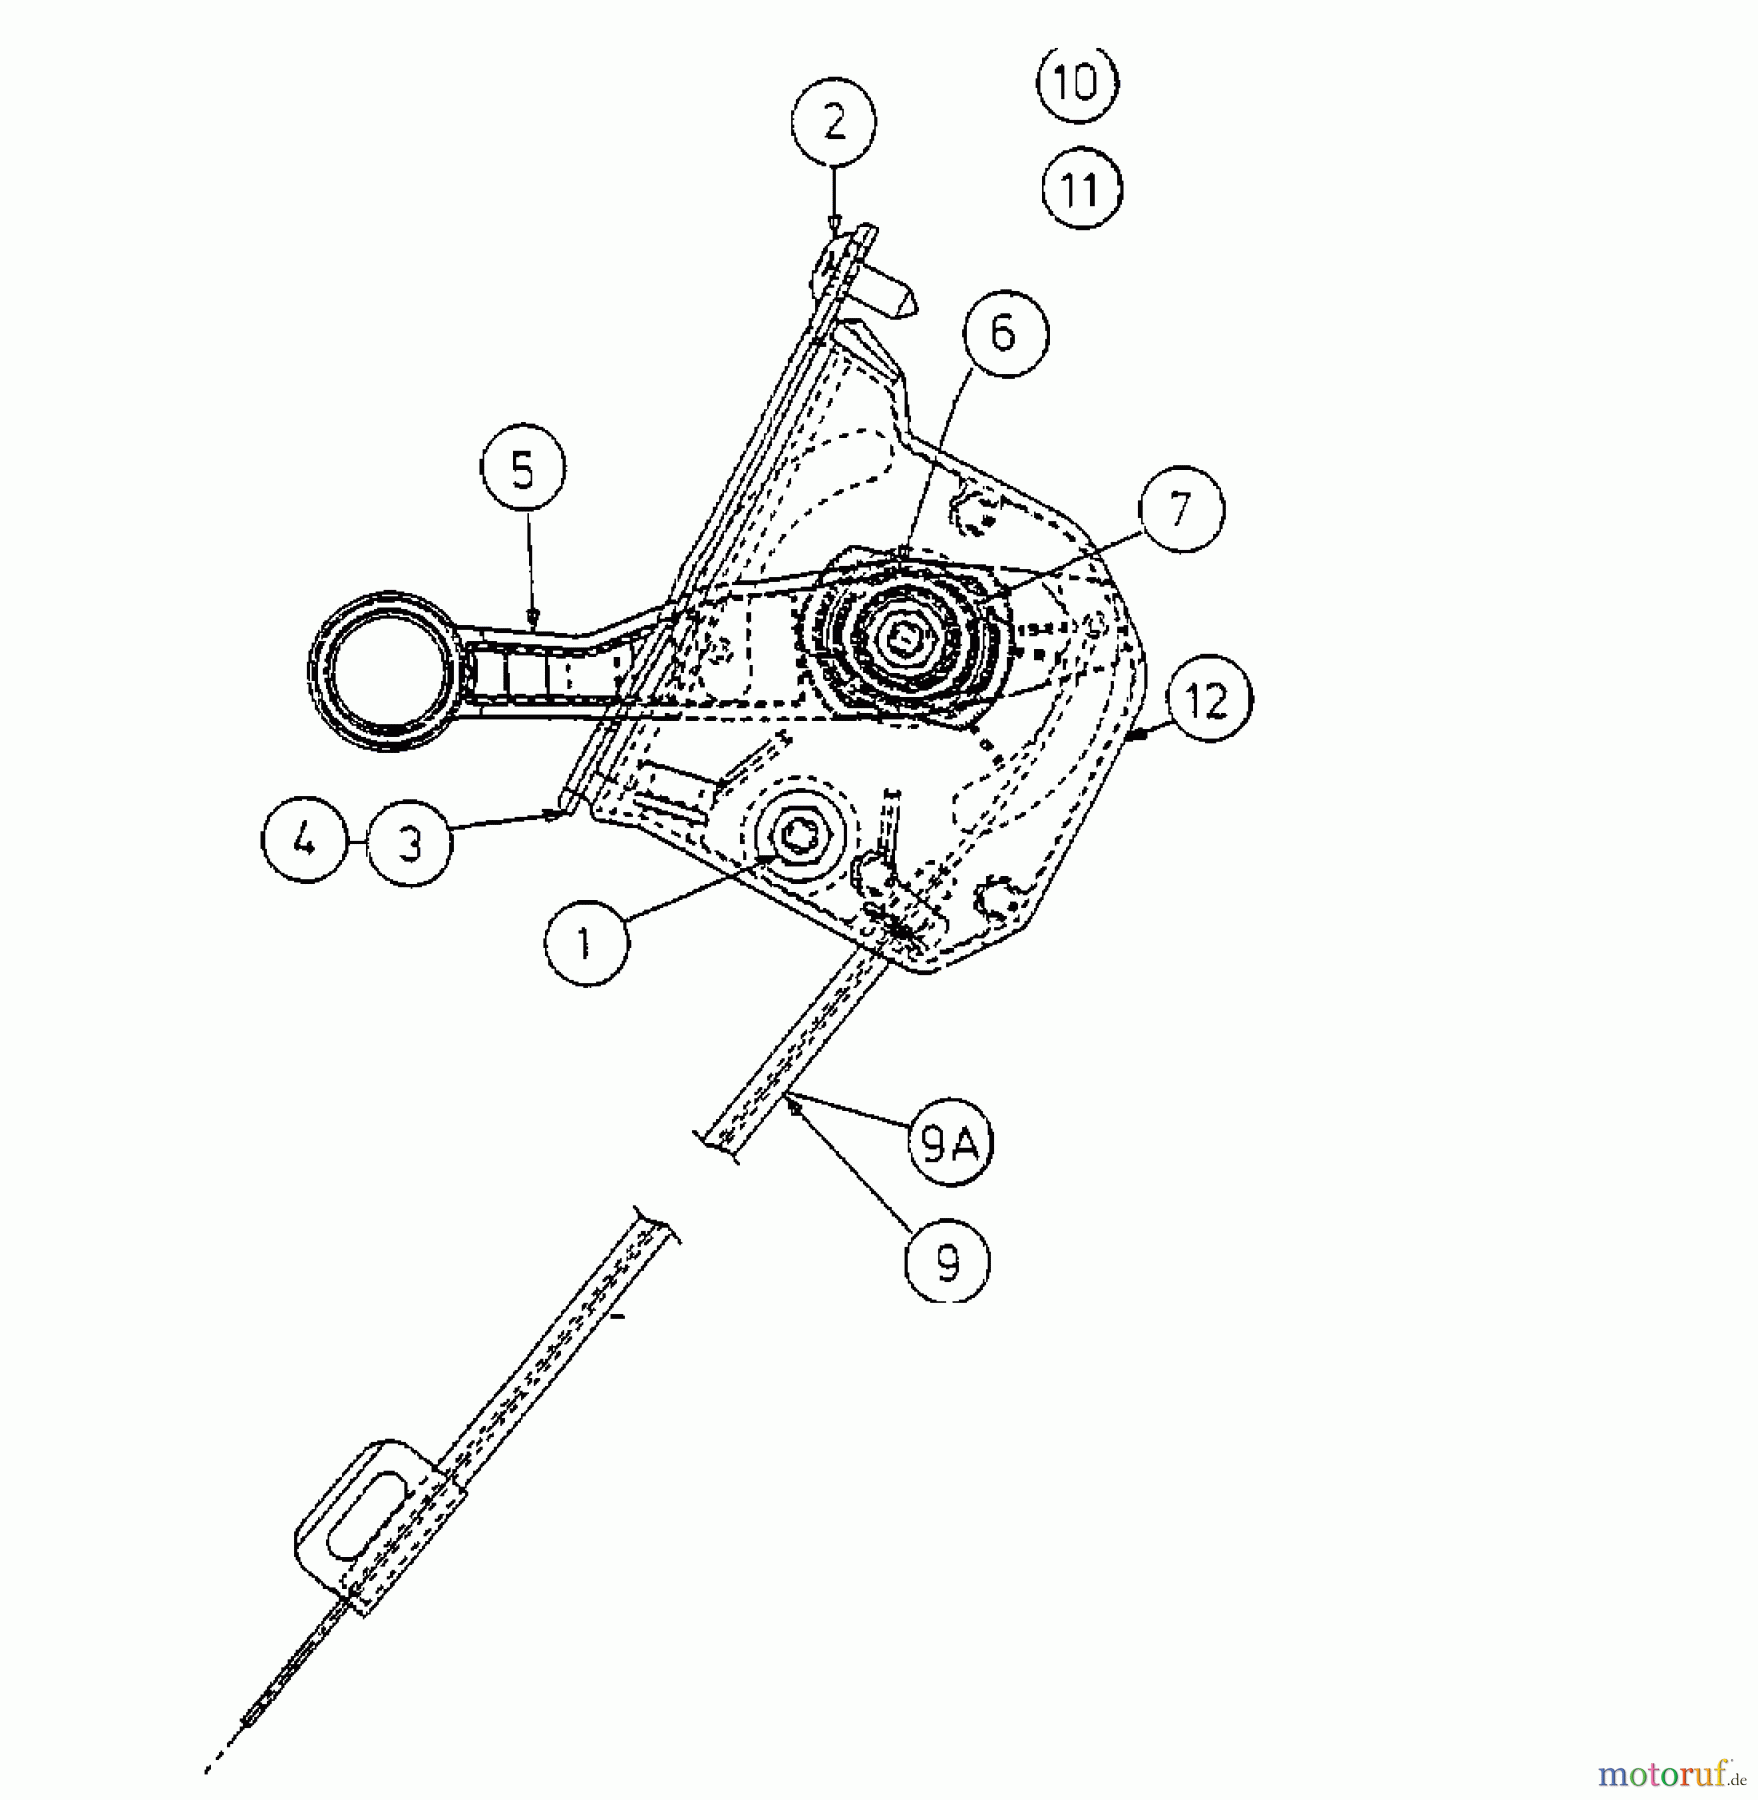  Mastercut Tillers T/450 21A-458B659  (2000) Throttle lever